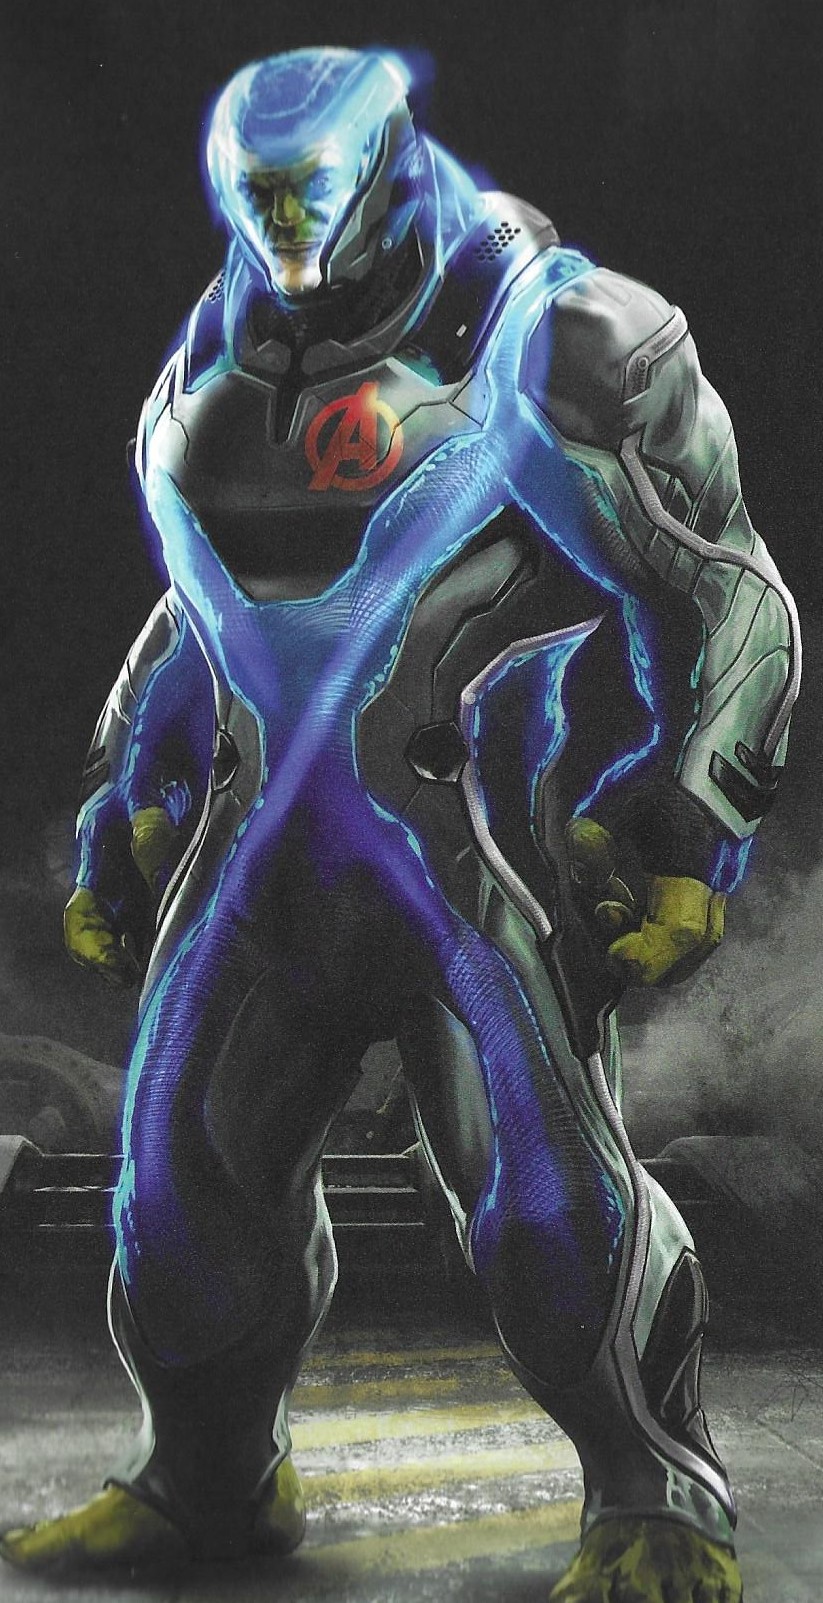 Avengers Endgame Concept Art Reveals Weird Alternate Team